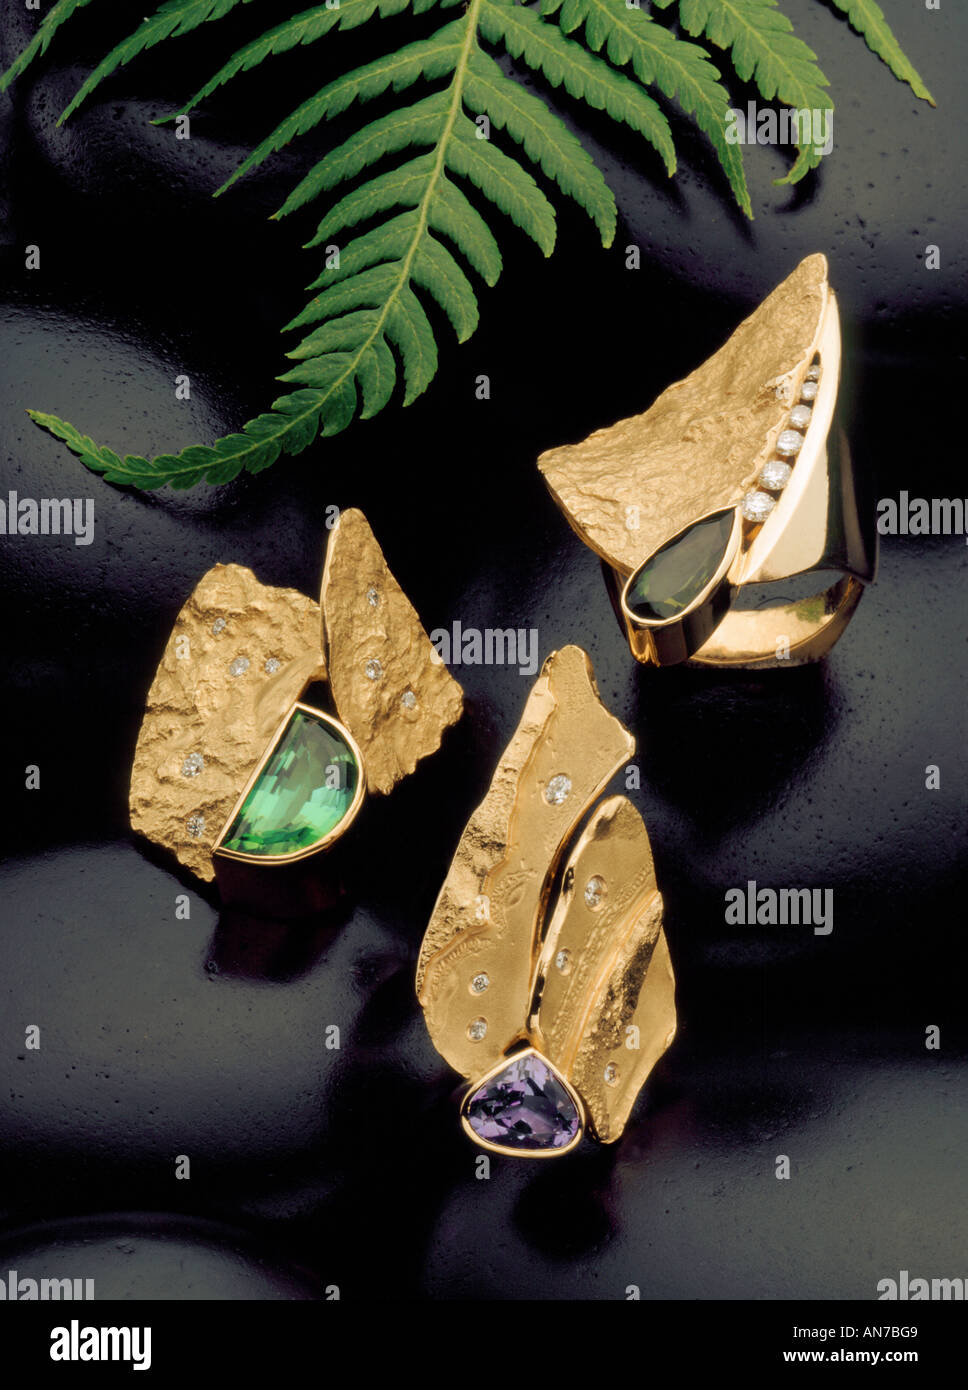 Custom made FINE GOLD JEWELRY RINGS set with TOURMALINE TANZANITE DIAMONDS Stock Photo